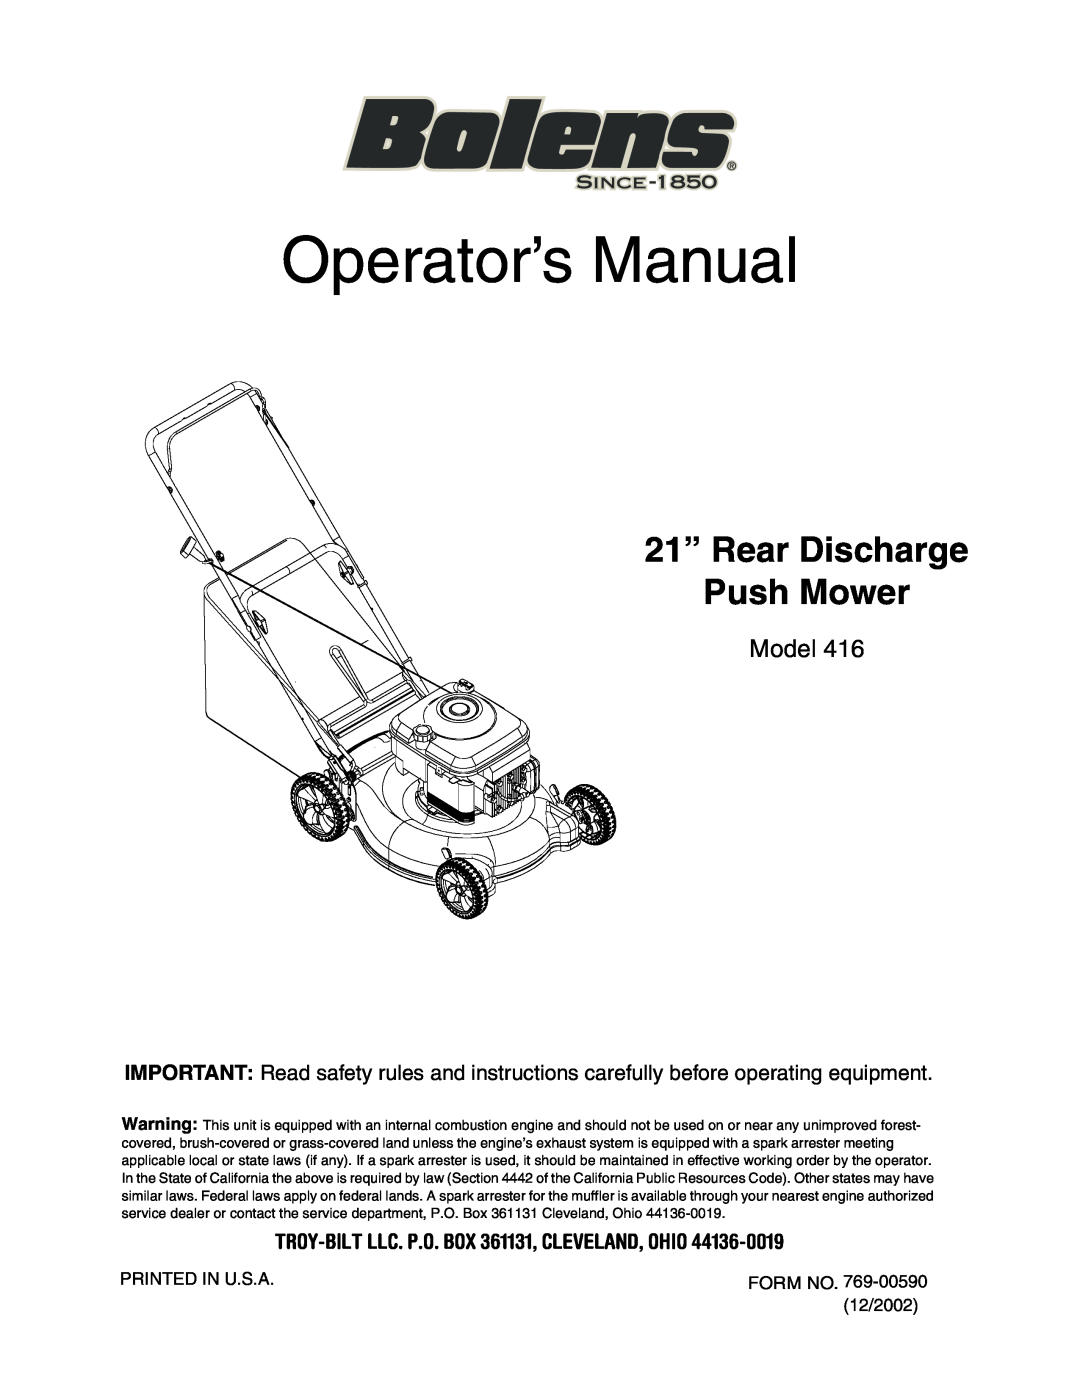 Bolens 416 manual Operator’s Manual, 21” Rear Discharge Push Mower, Model, TROY-BILT LLC. P.O. BOX 361131, CLEVELAND, OHIO 